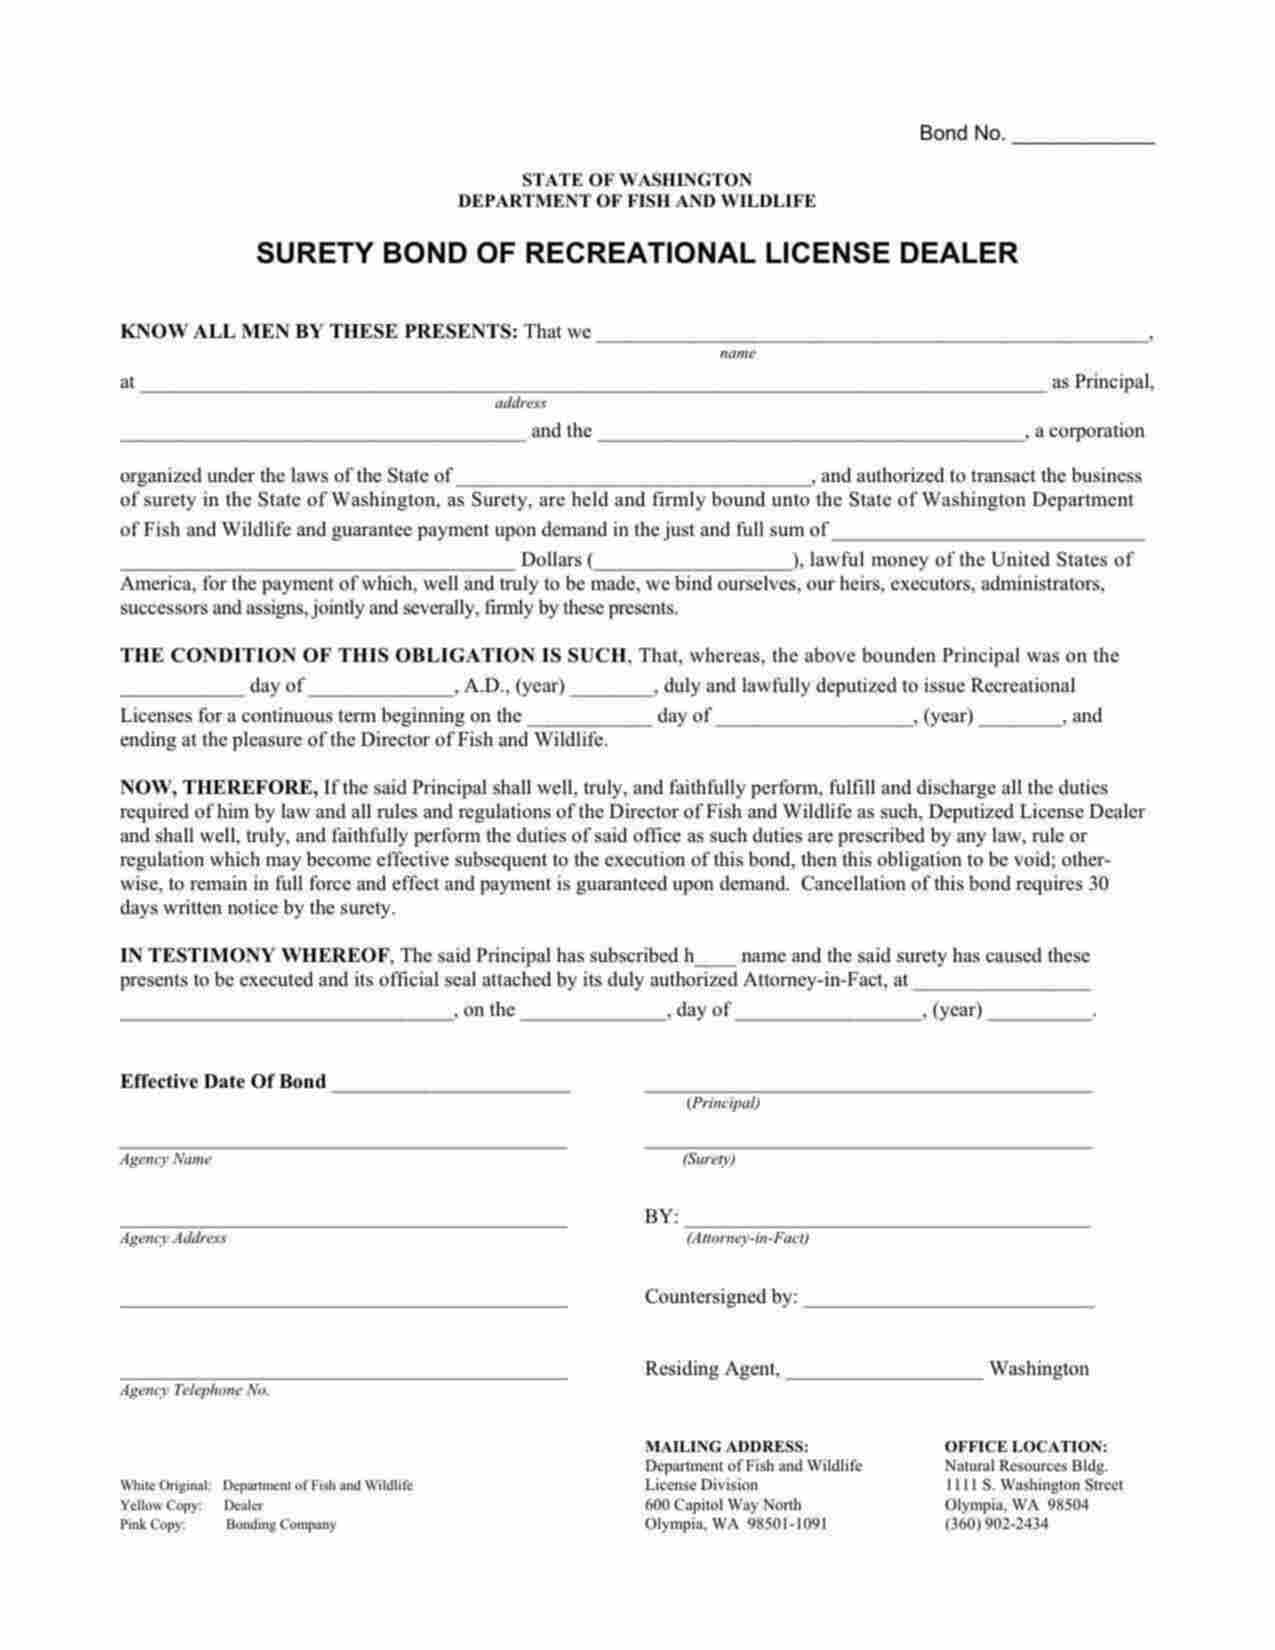 Washington Recreational License Dealer Bond Form